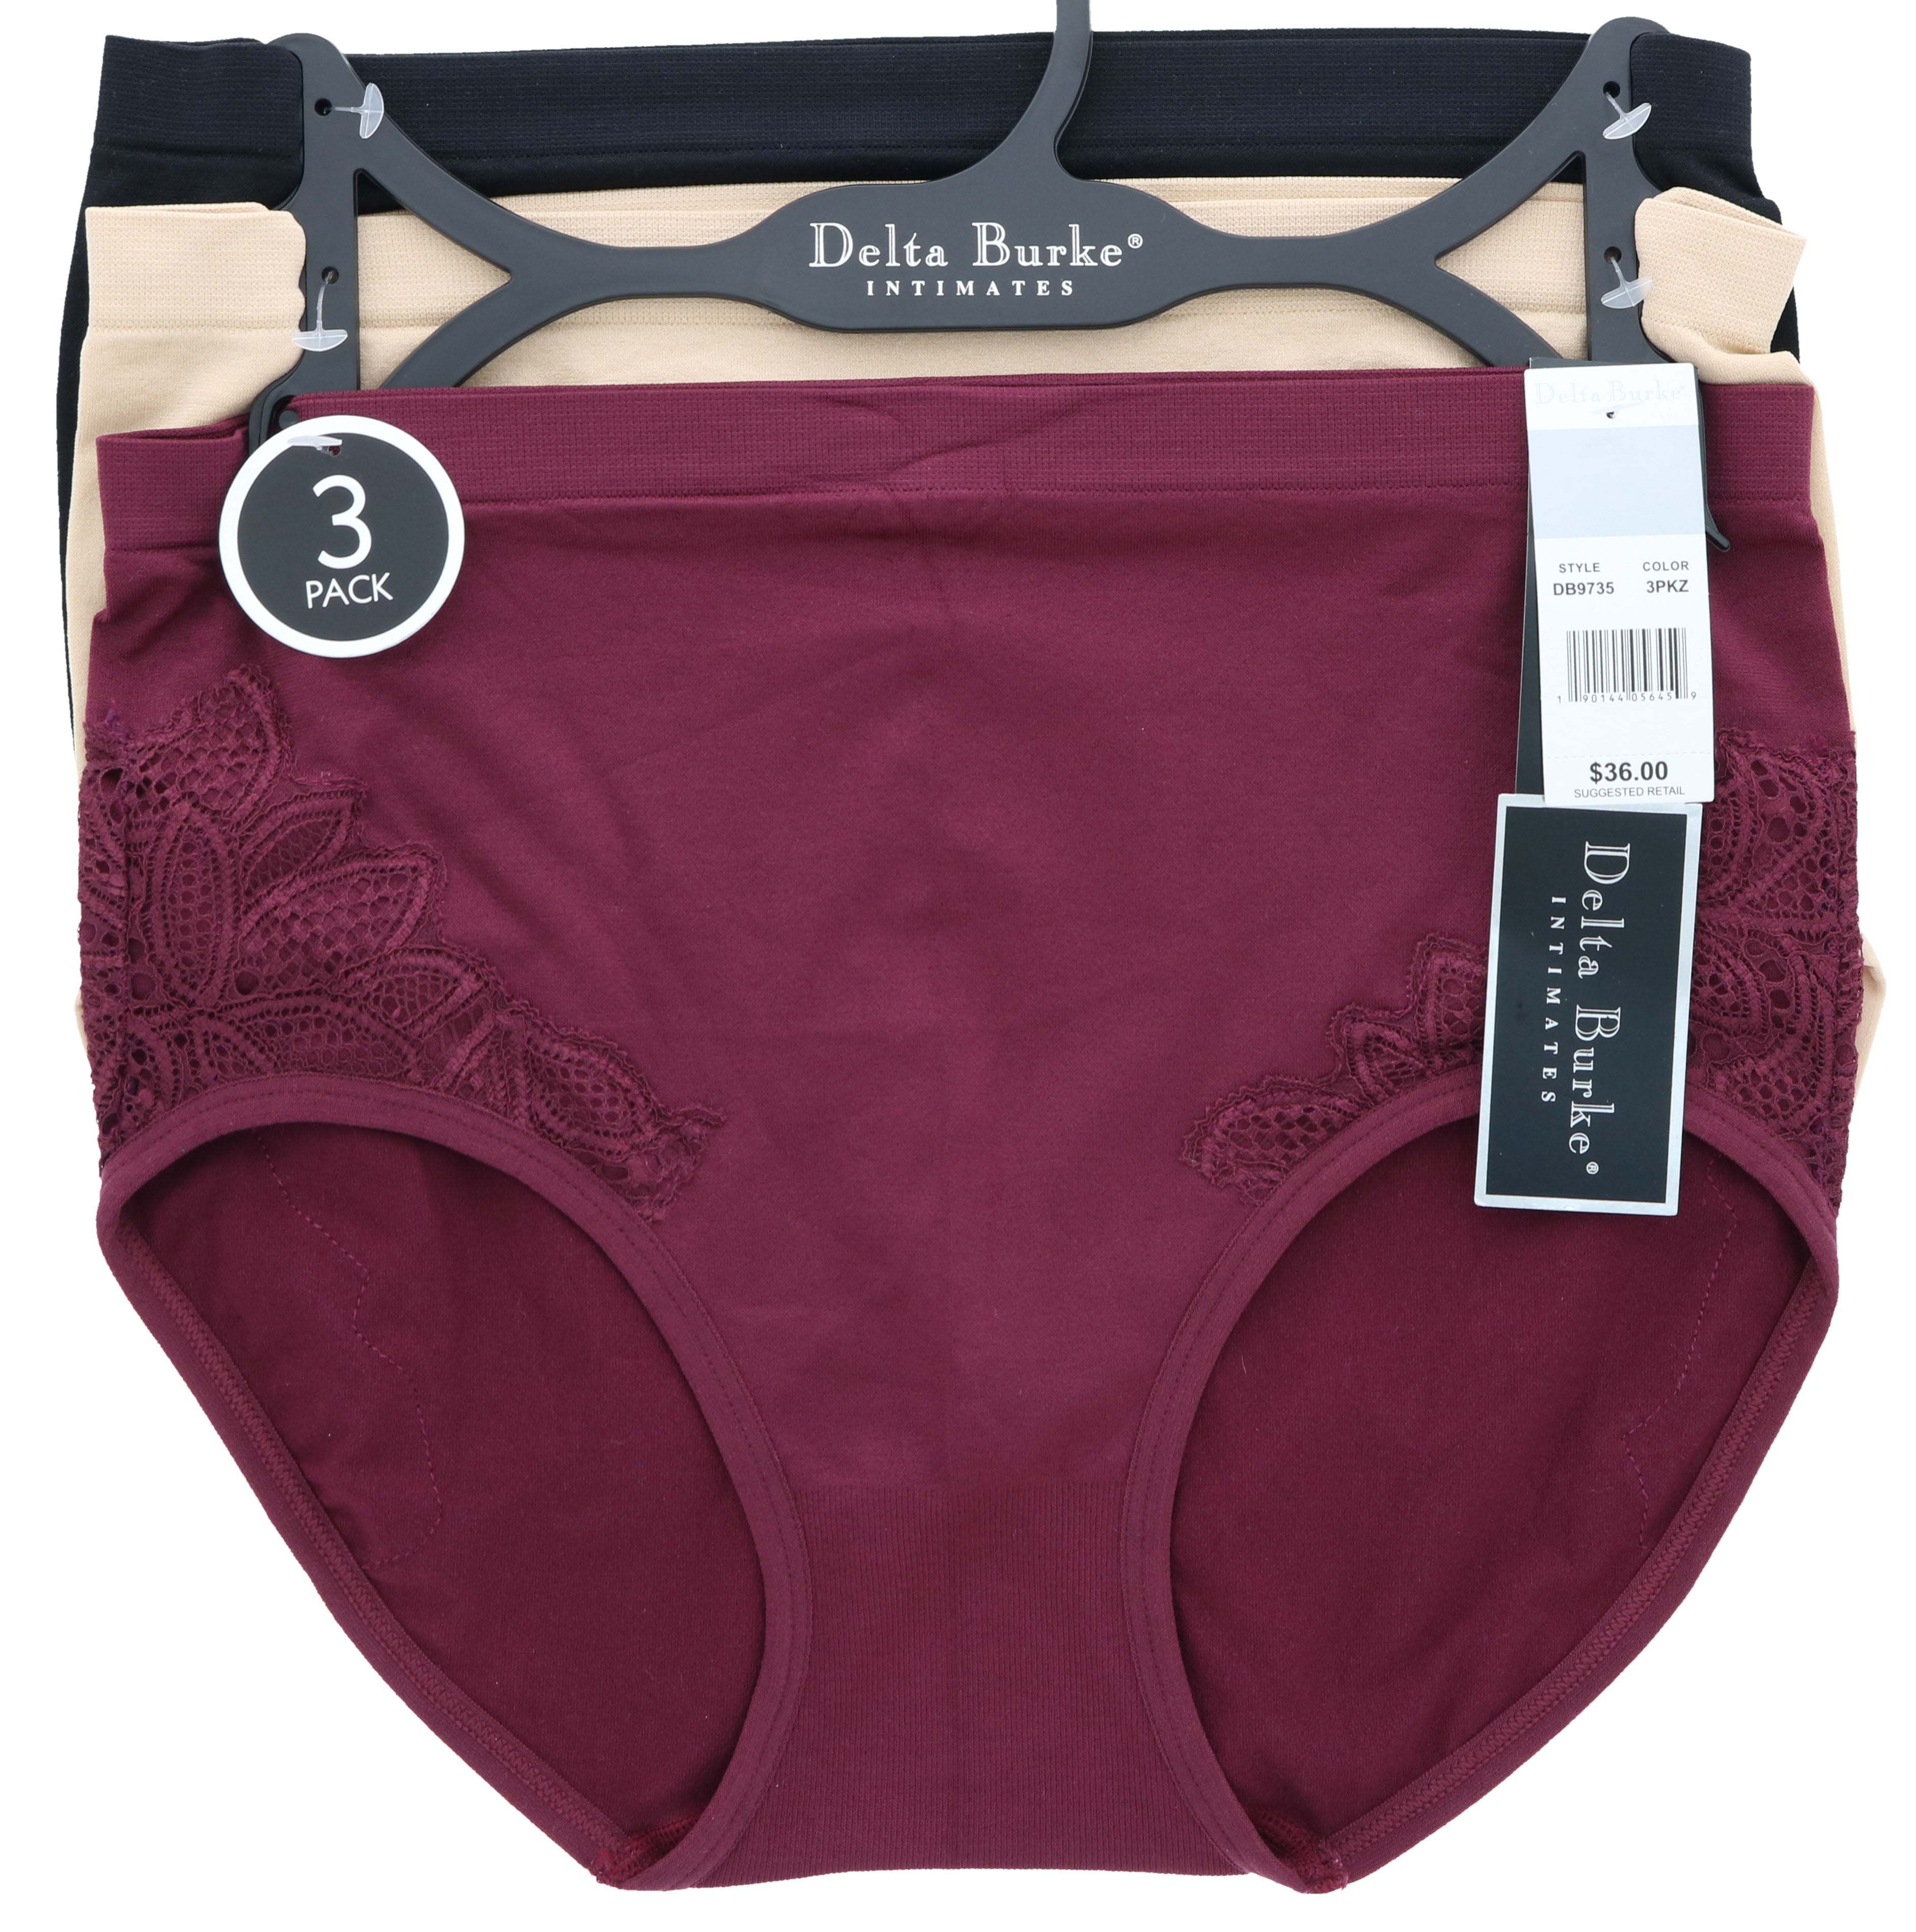 Stylish Delta Burke Intimates Panties - Size 2X